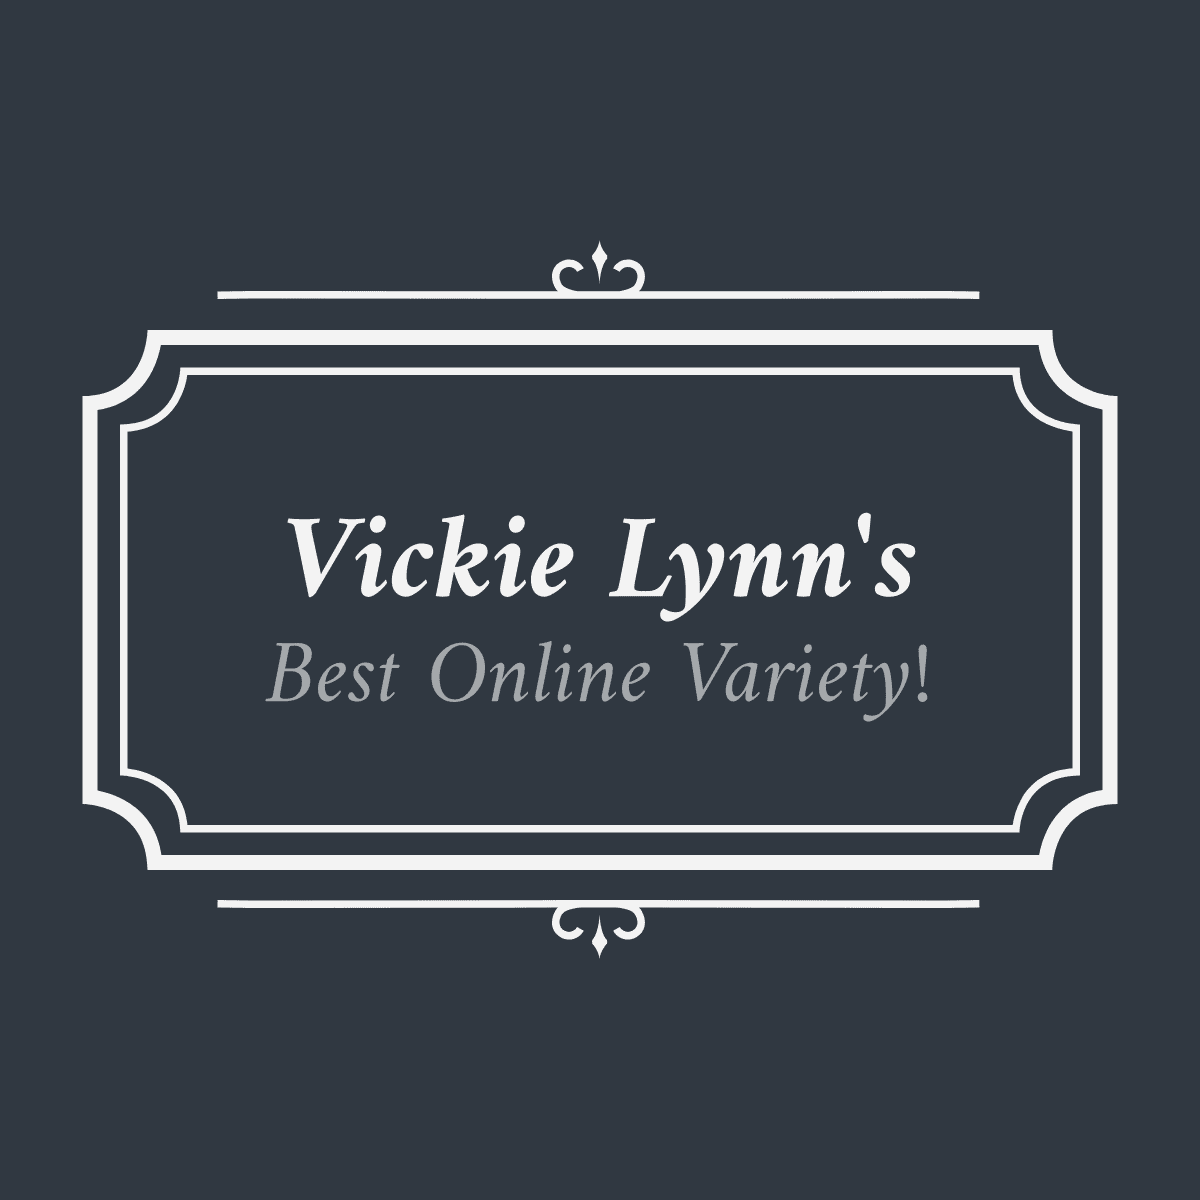 Vickie Lynn's